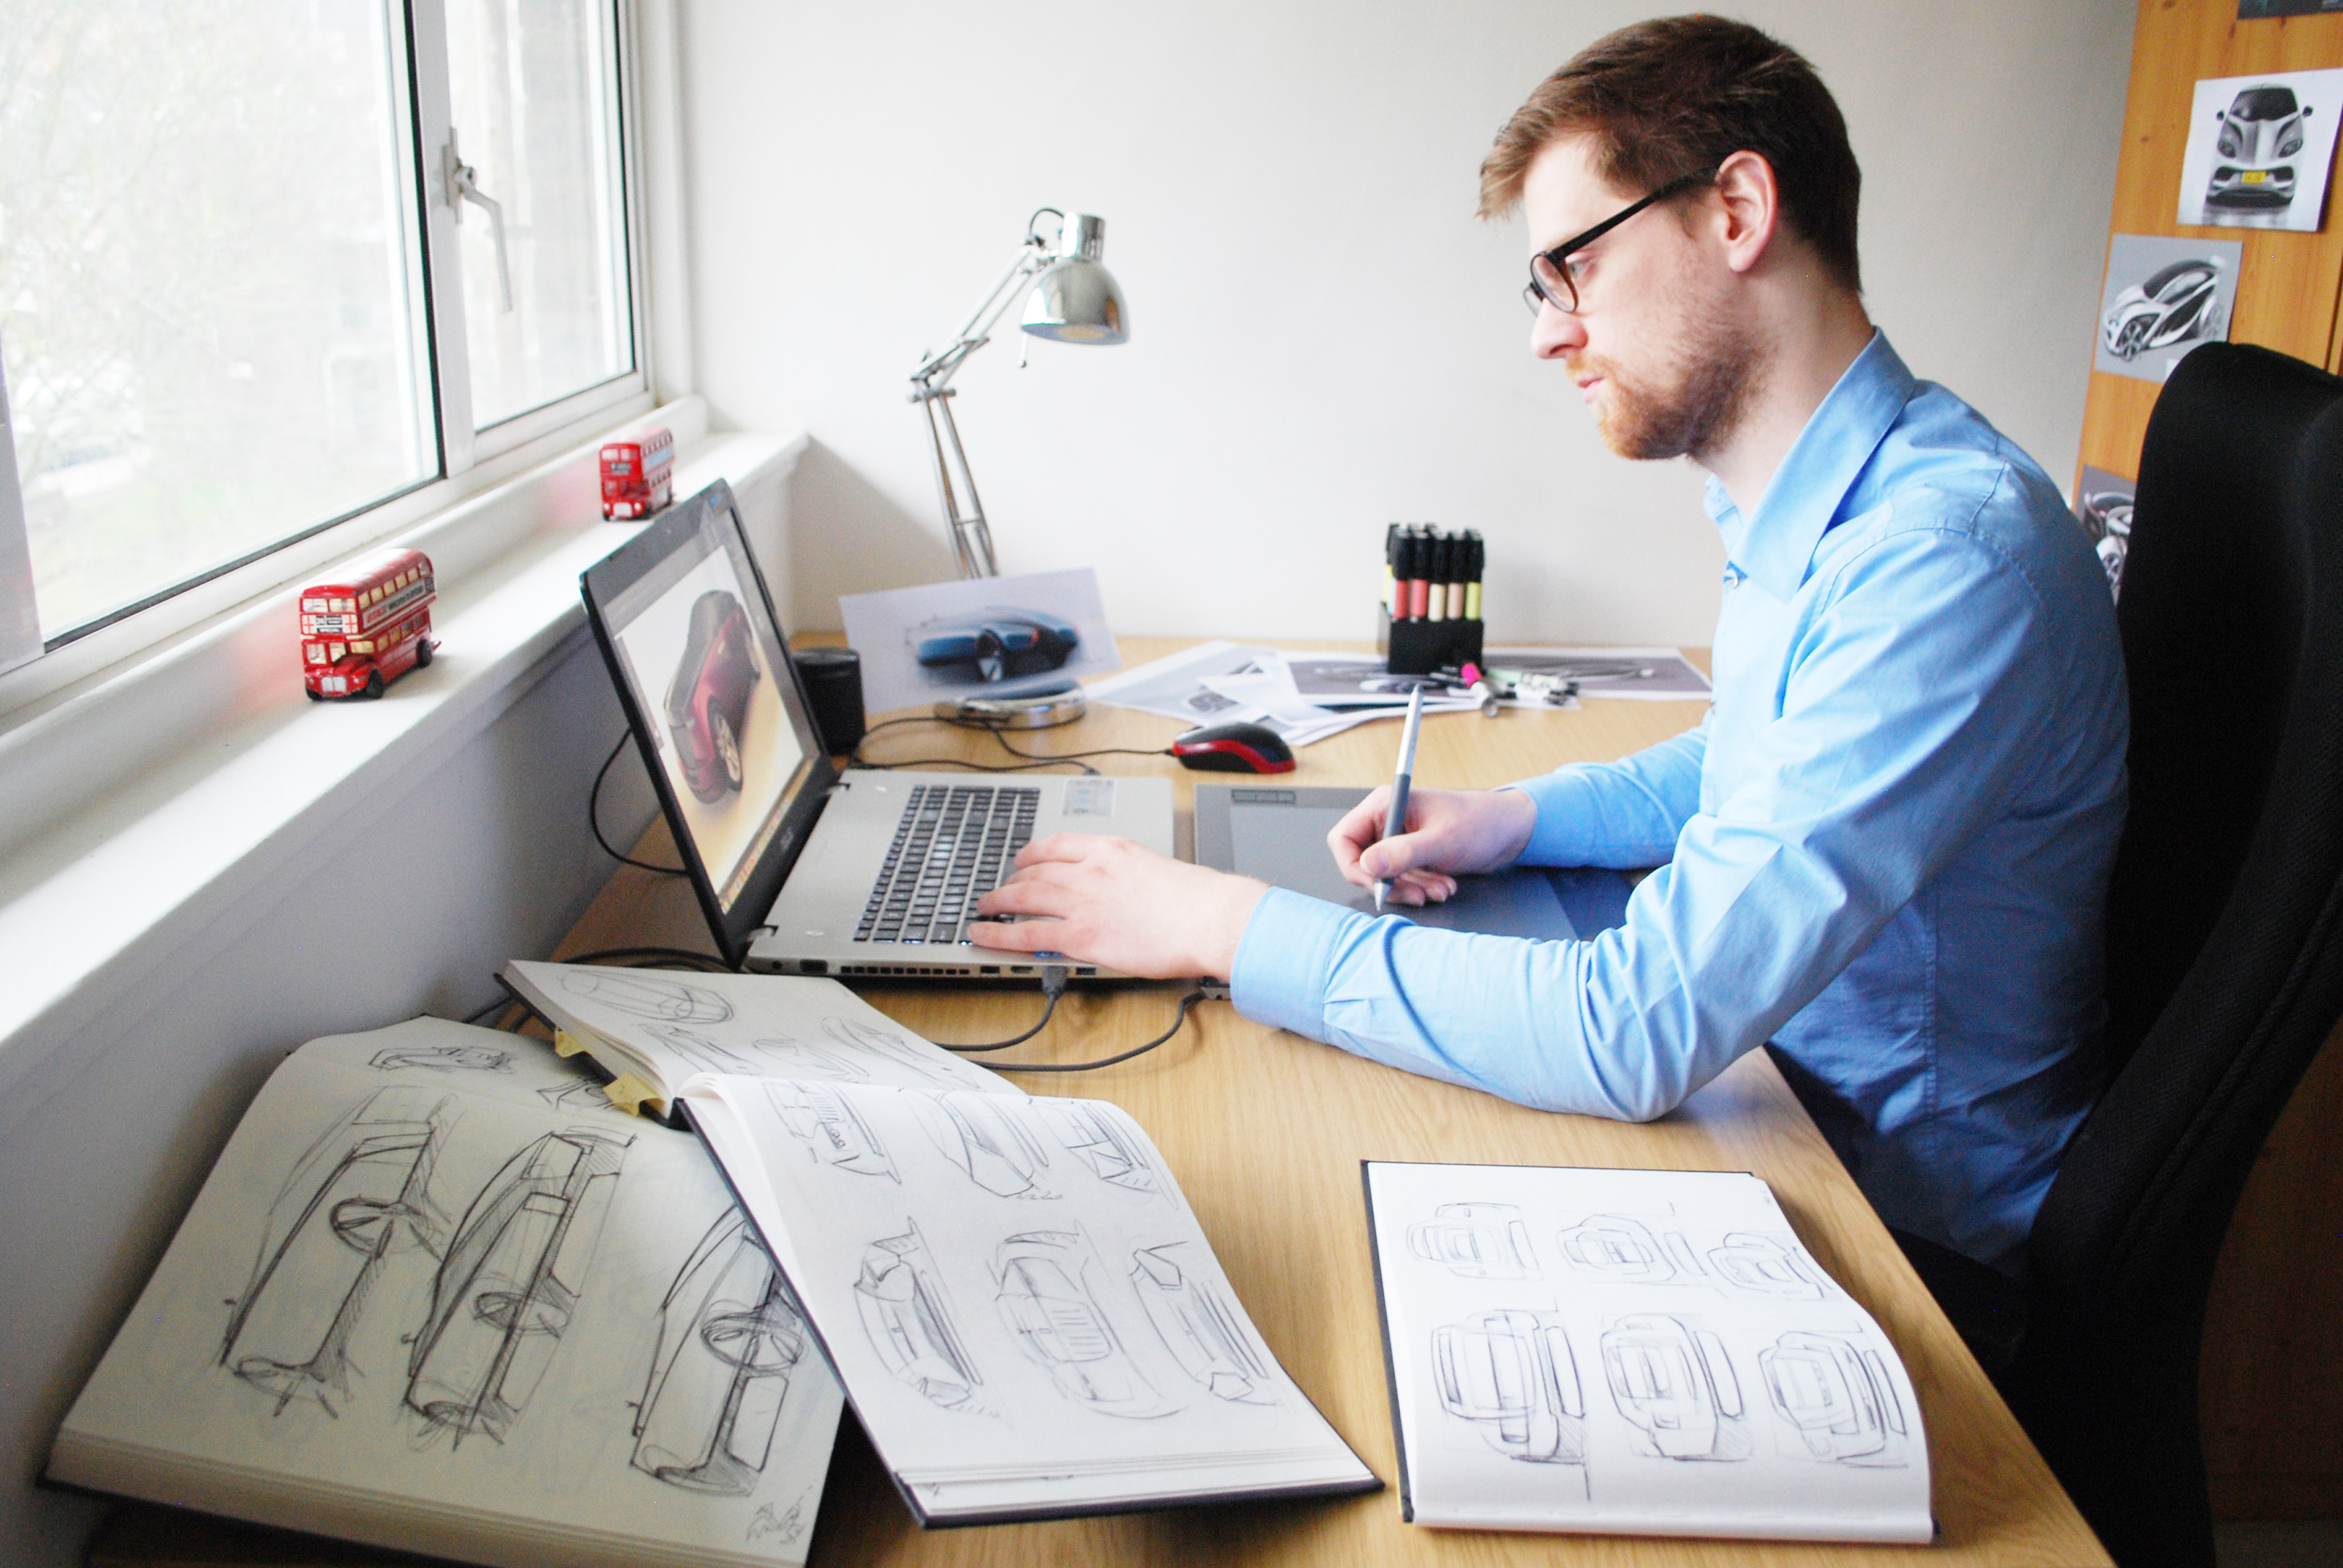 Niels van Roij at work in his design studio